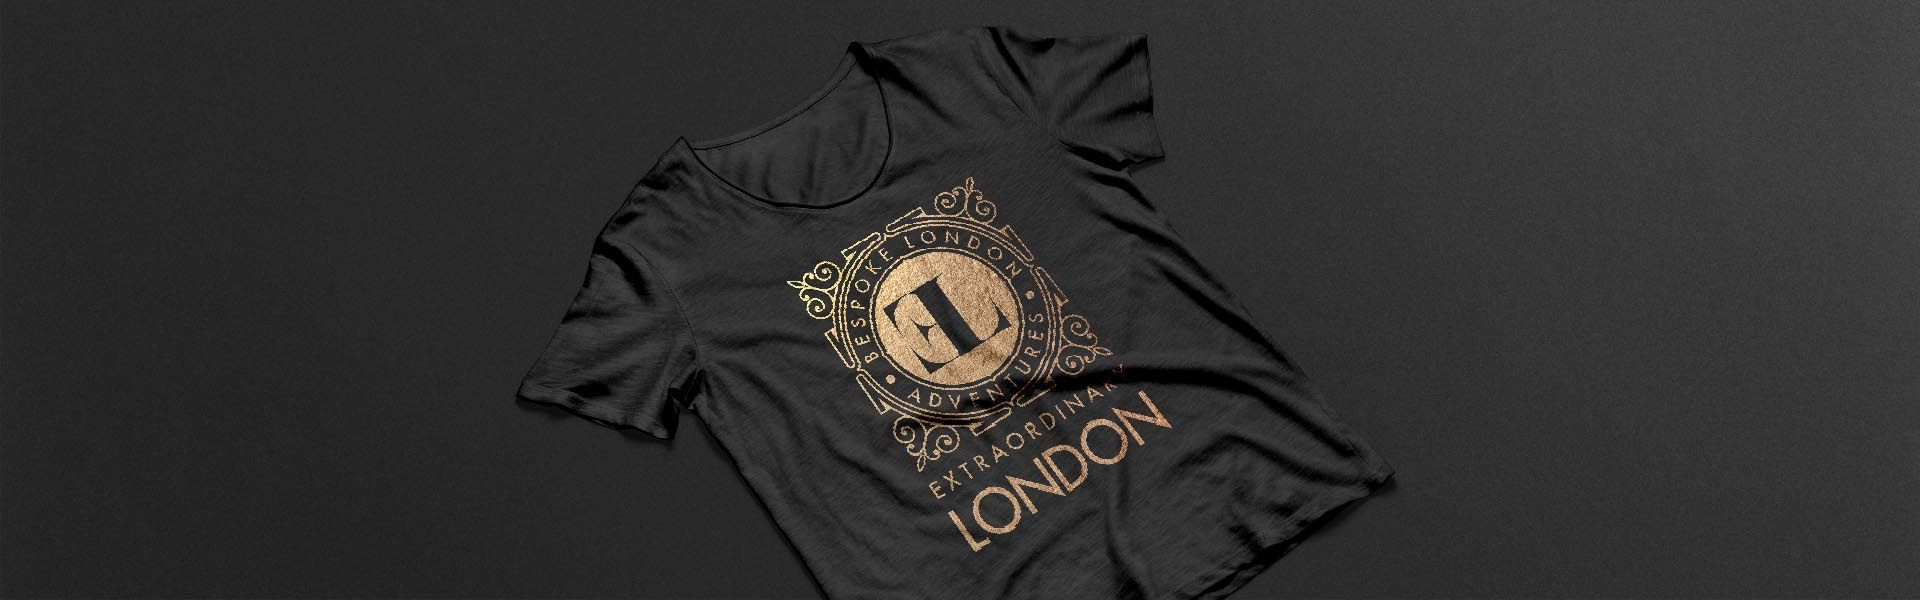 a black shirt that says extraordinary london on it